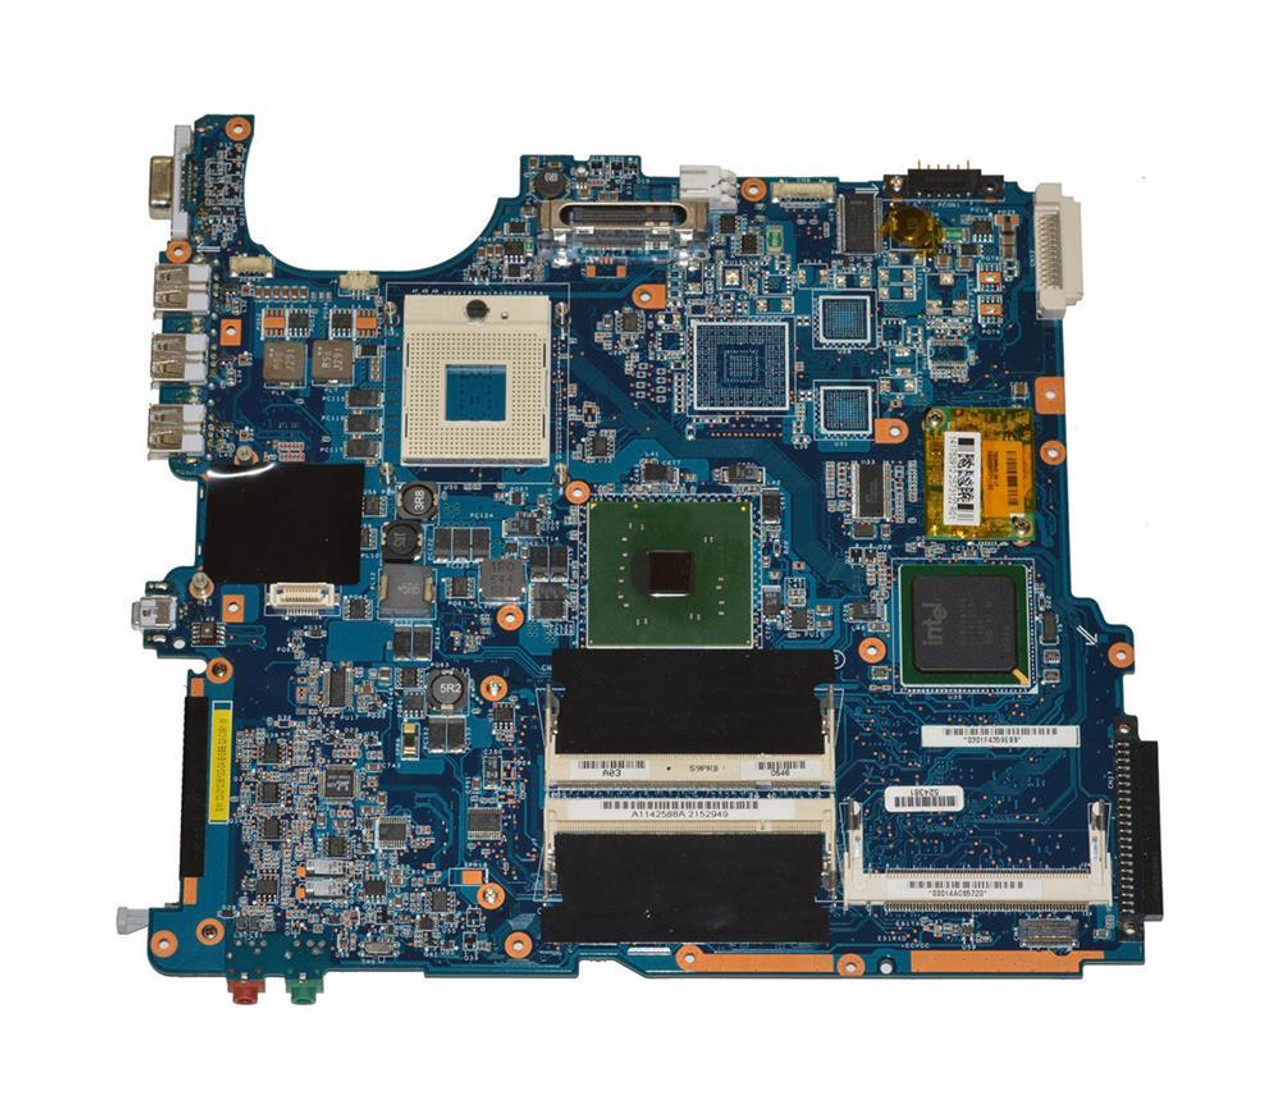 B-9986-205-2 Sony System Board (Motherboard) for Sony Vaio Vpc-Eg1bfx (Refurbished)